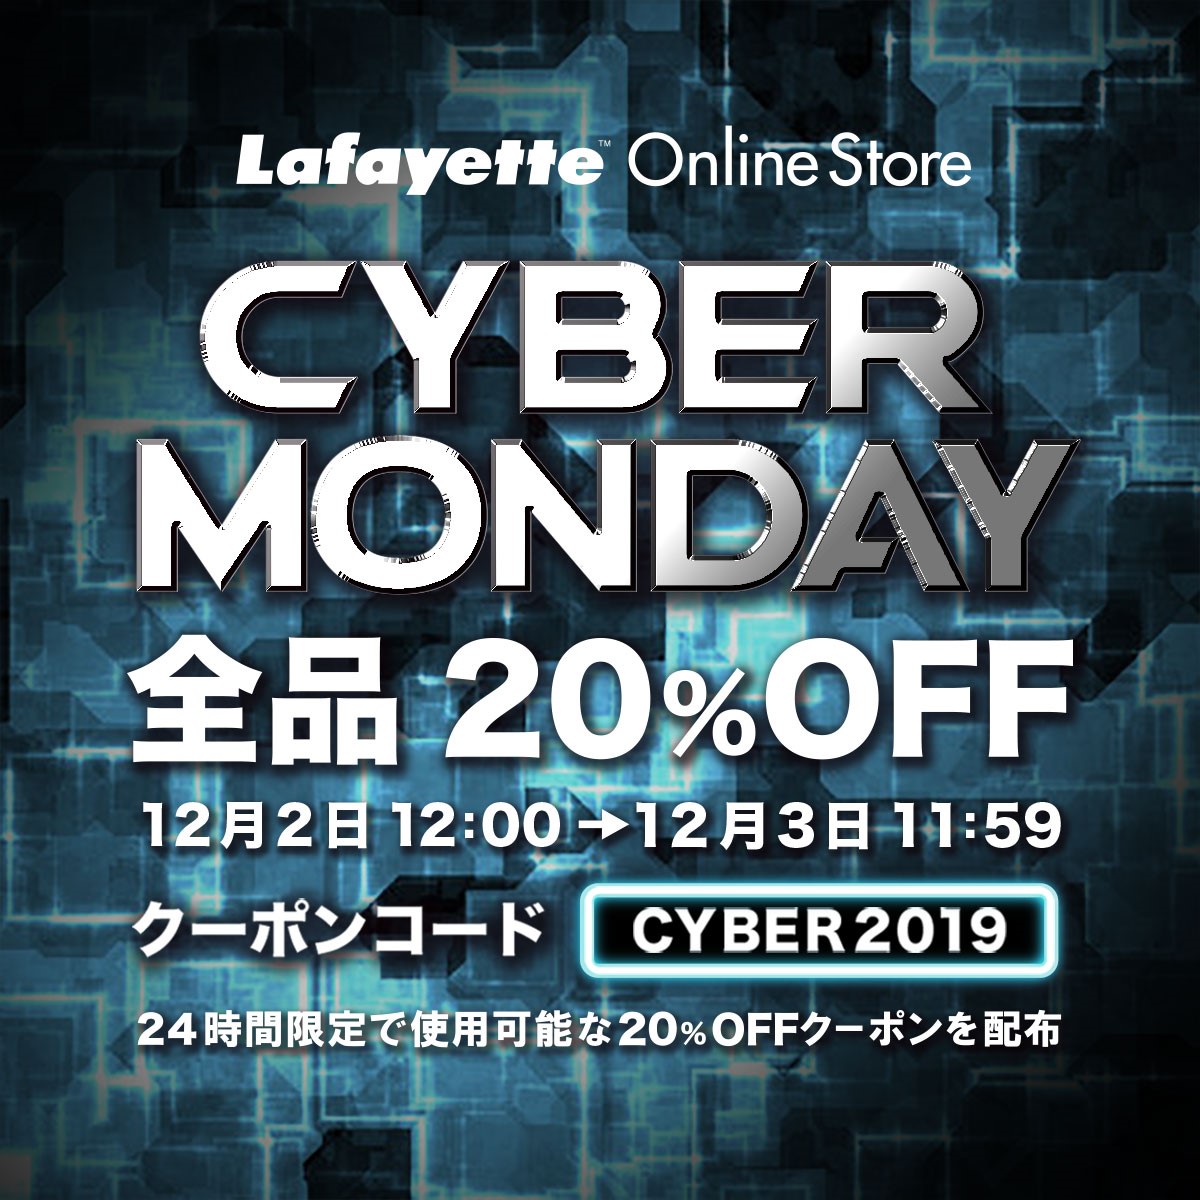 Lafayette Online Store Cyber Monday Sale!!